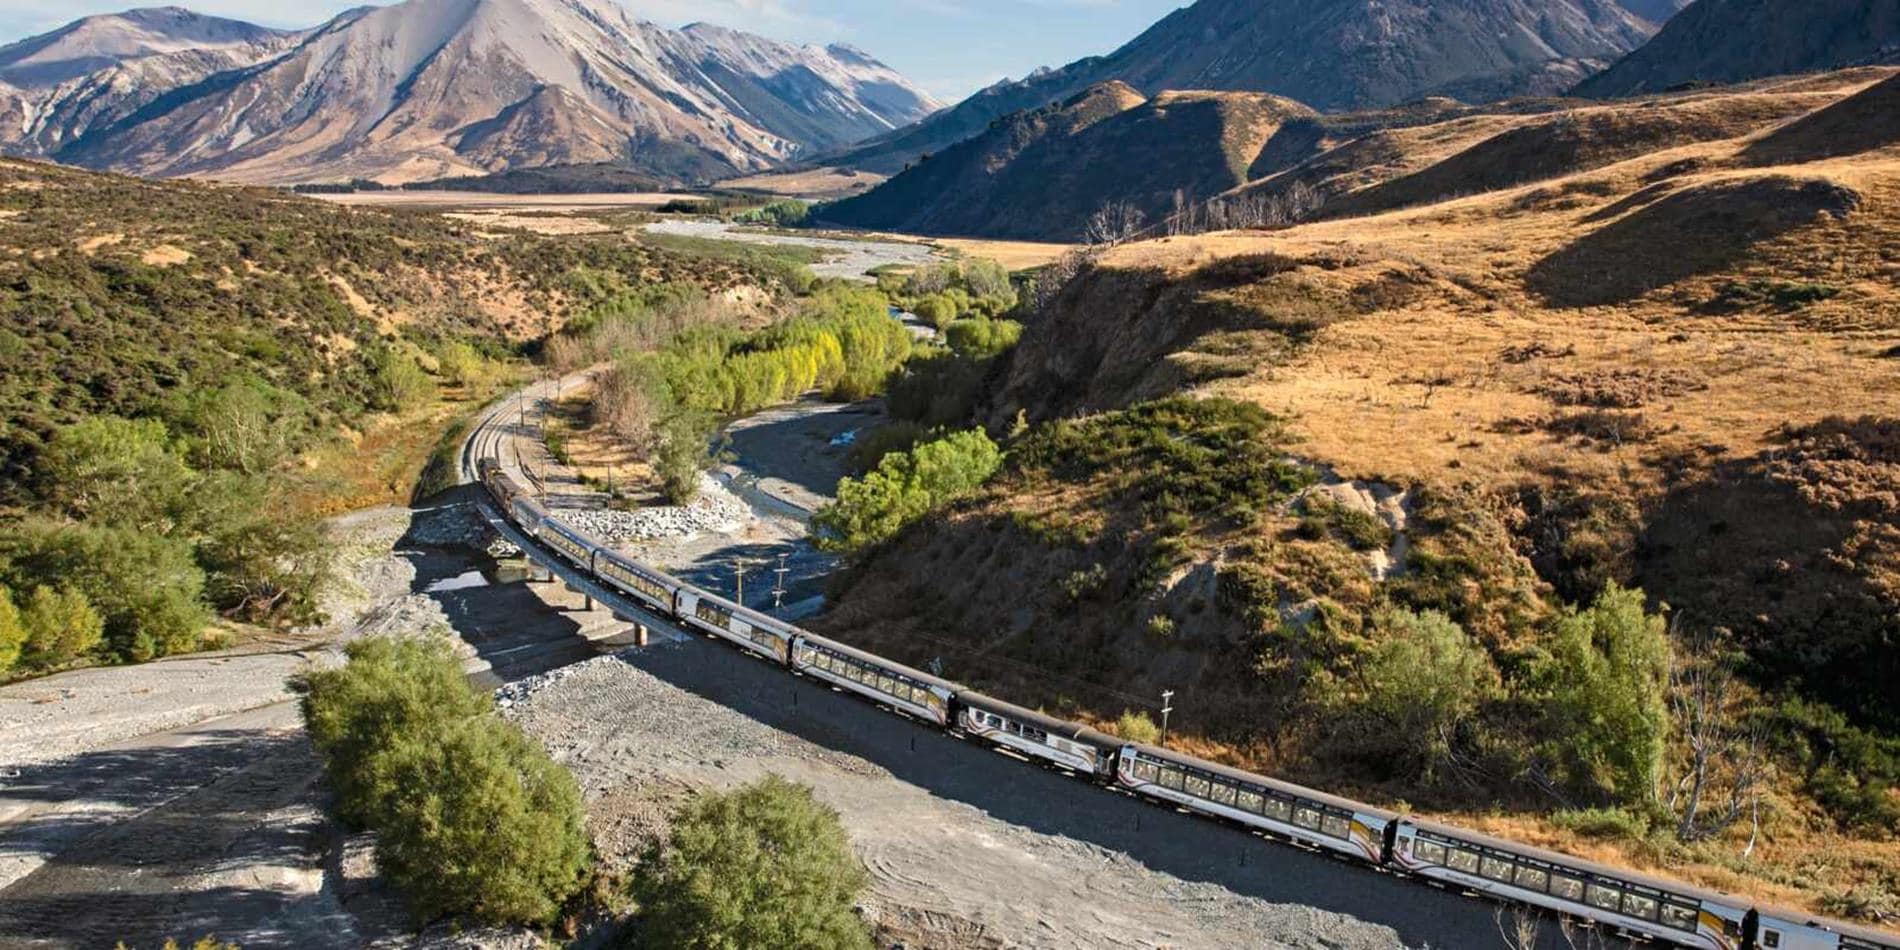 View of Tranzalpine train through hillside, New Zealand